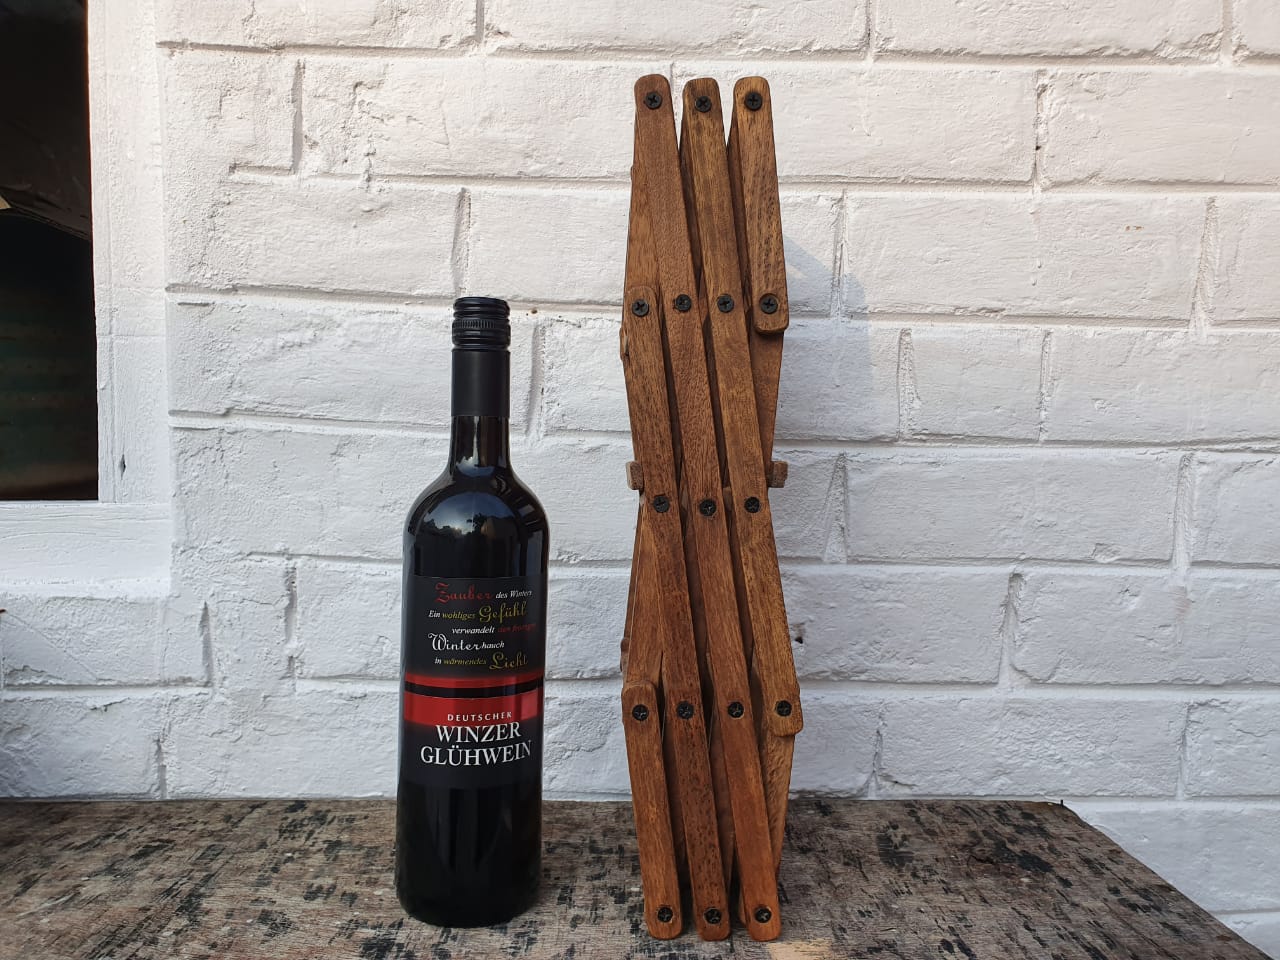 Portable Wooden Wine Rack